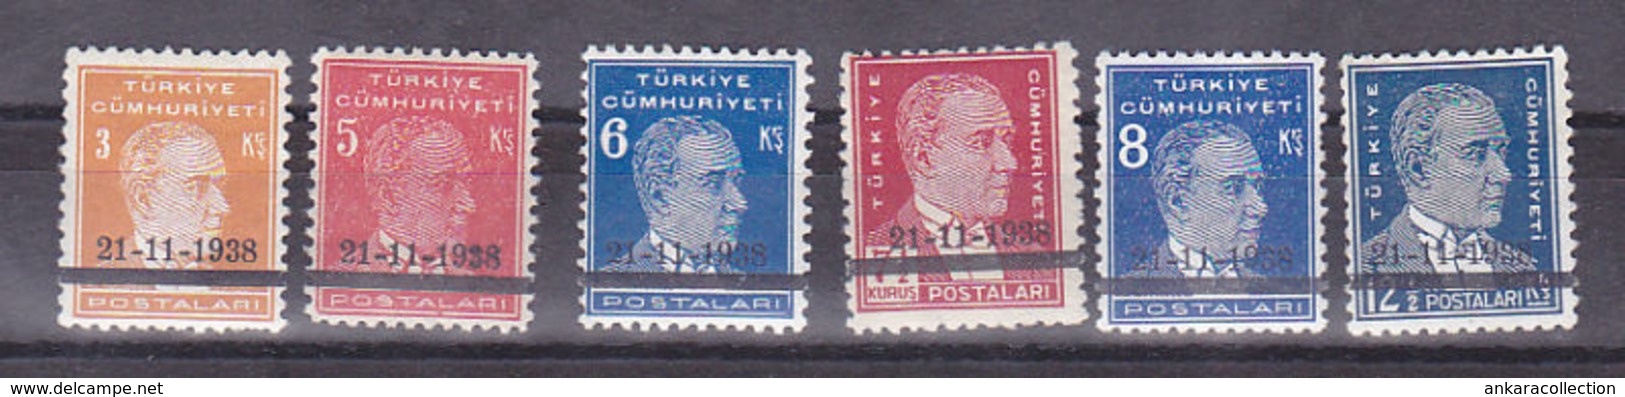 AC - TURKEY STAMP - ATATURK MOURNING MNH 21 NOVEMBER 1938 - Unused Stamps